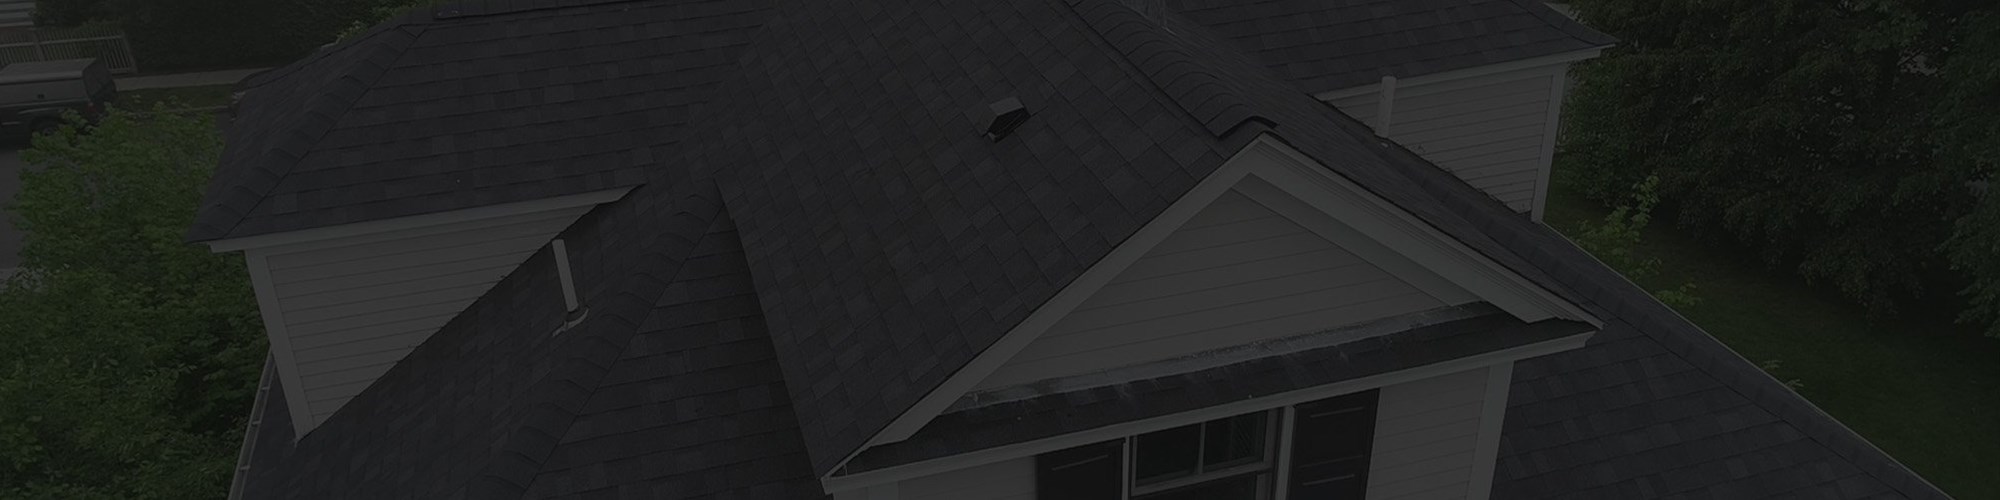 Newly repaired residential asphalt roof in New Bedford, Massachusetts